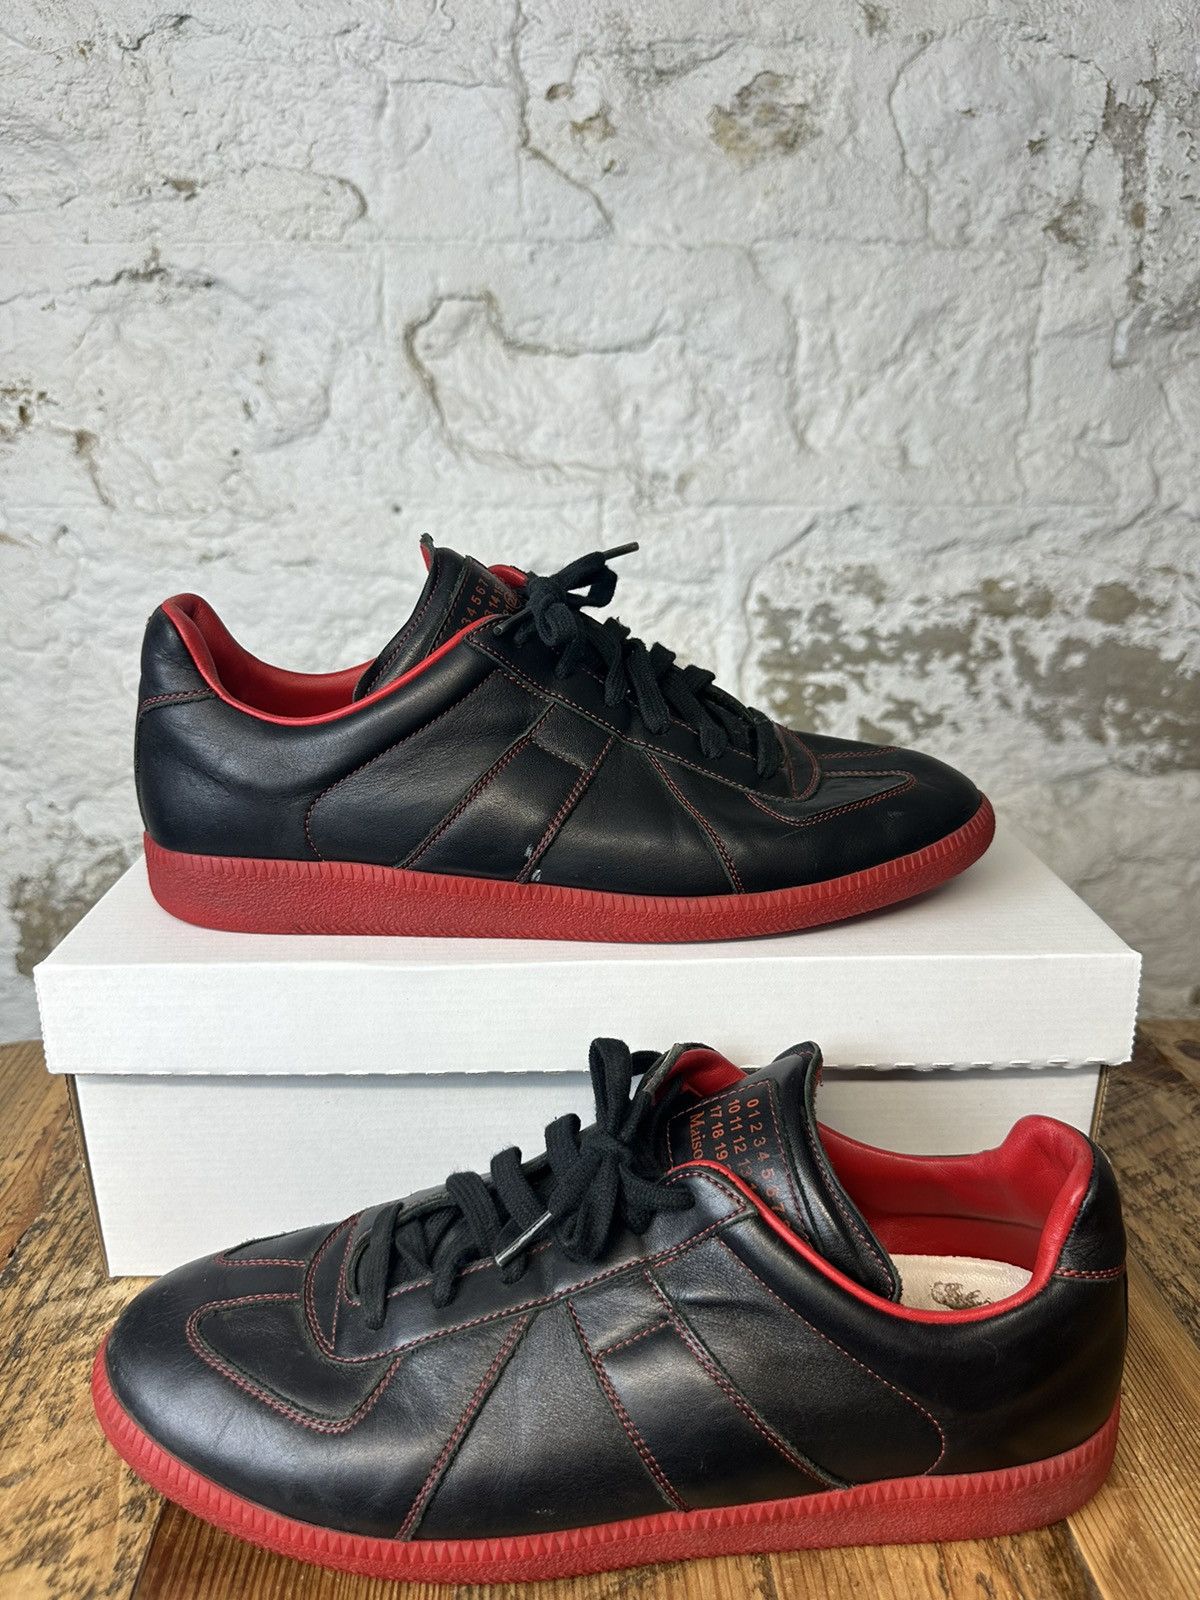 Pre-owned Maison Margiela Replica Black Red Low Sneaker Size 44